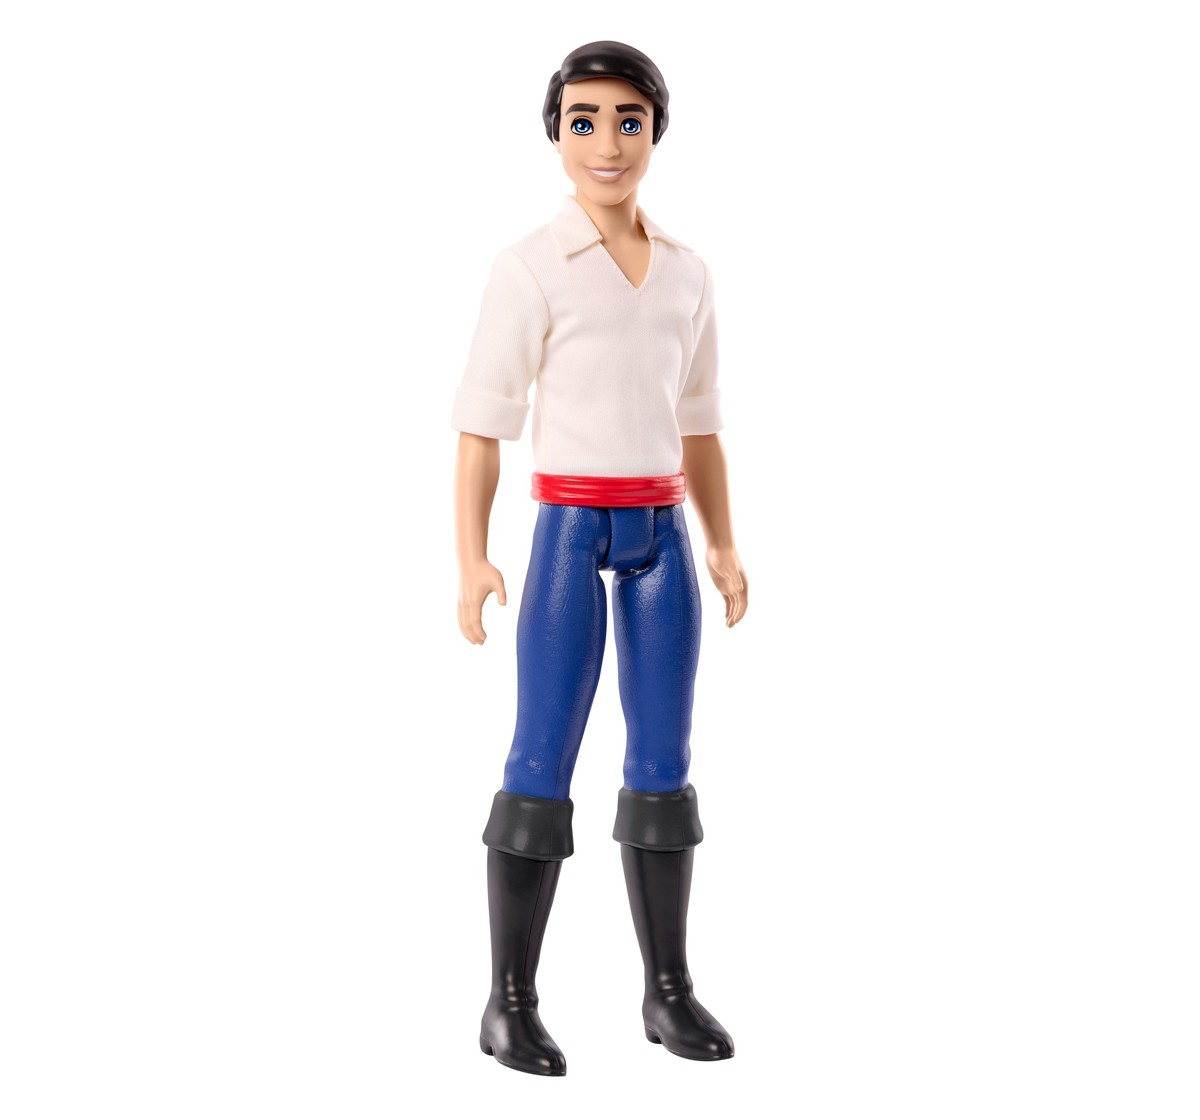 Disney Princess Toys, Posable Flynn Rider Fashion Doll, Kids for 3Y+, Assorted